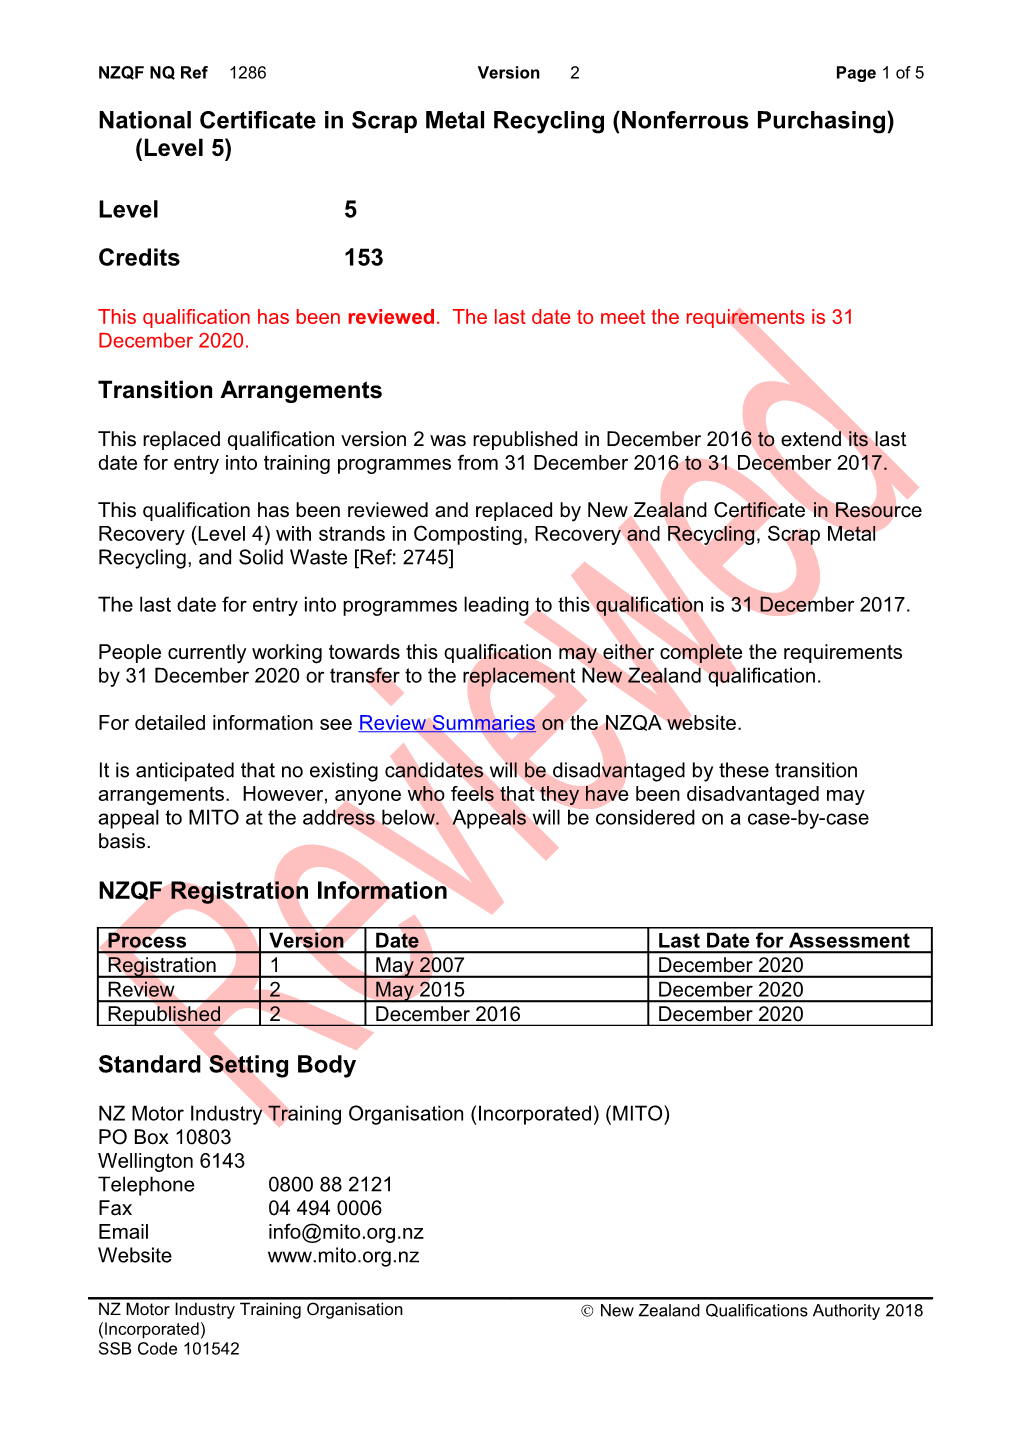 1286 National Certificate in Scrap Metal Recycling (Nonferrous Purchasing) (Level 5)